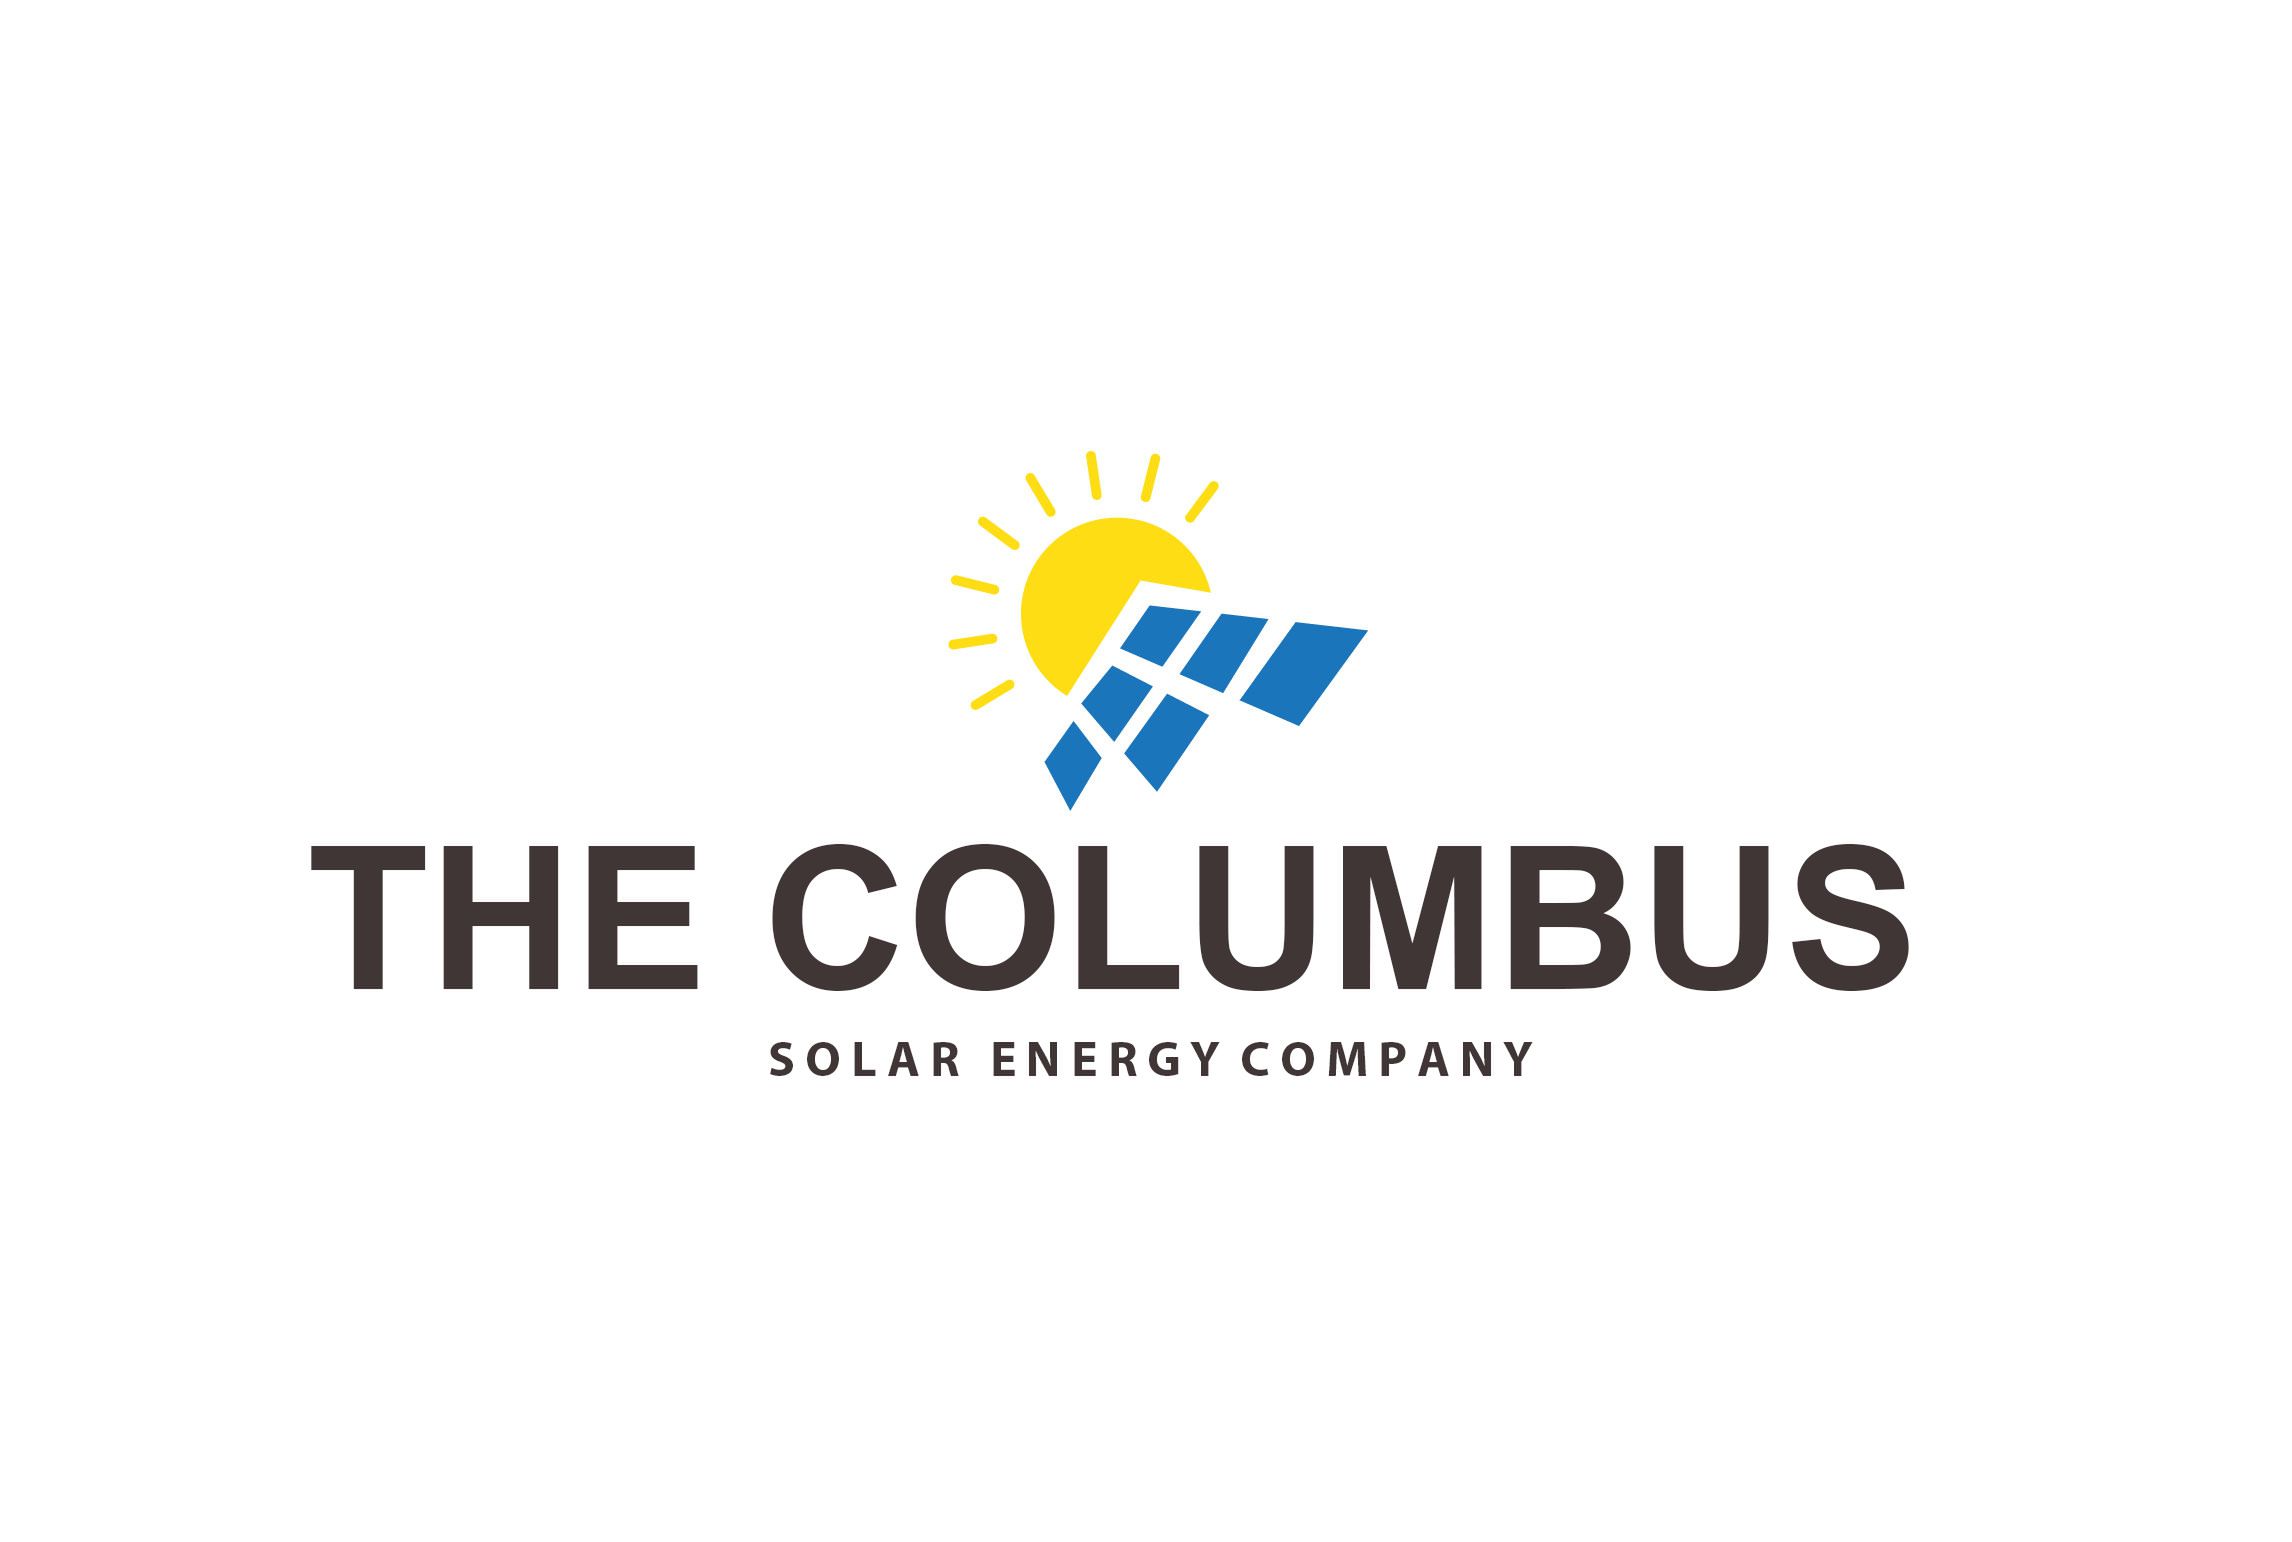 The Columbus Solar energy company